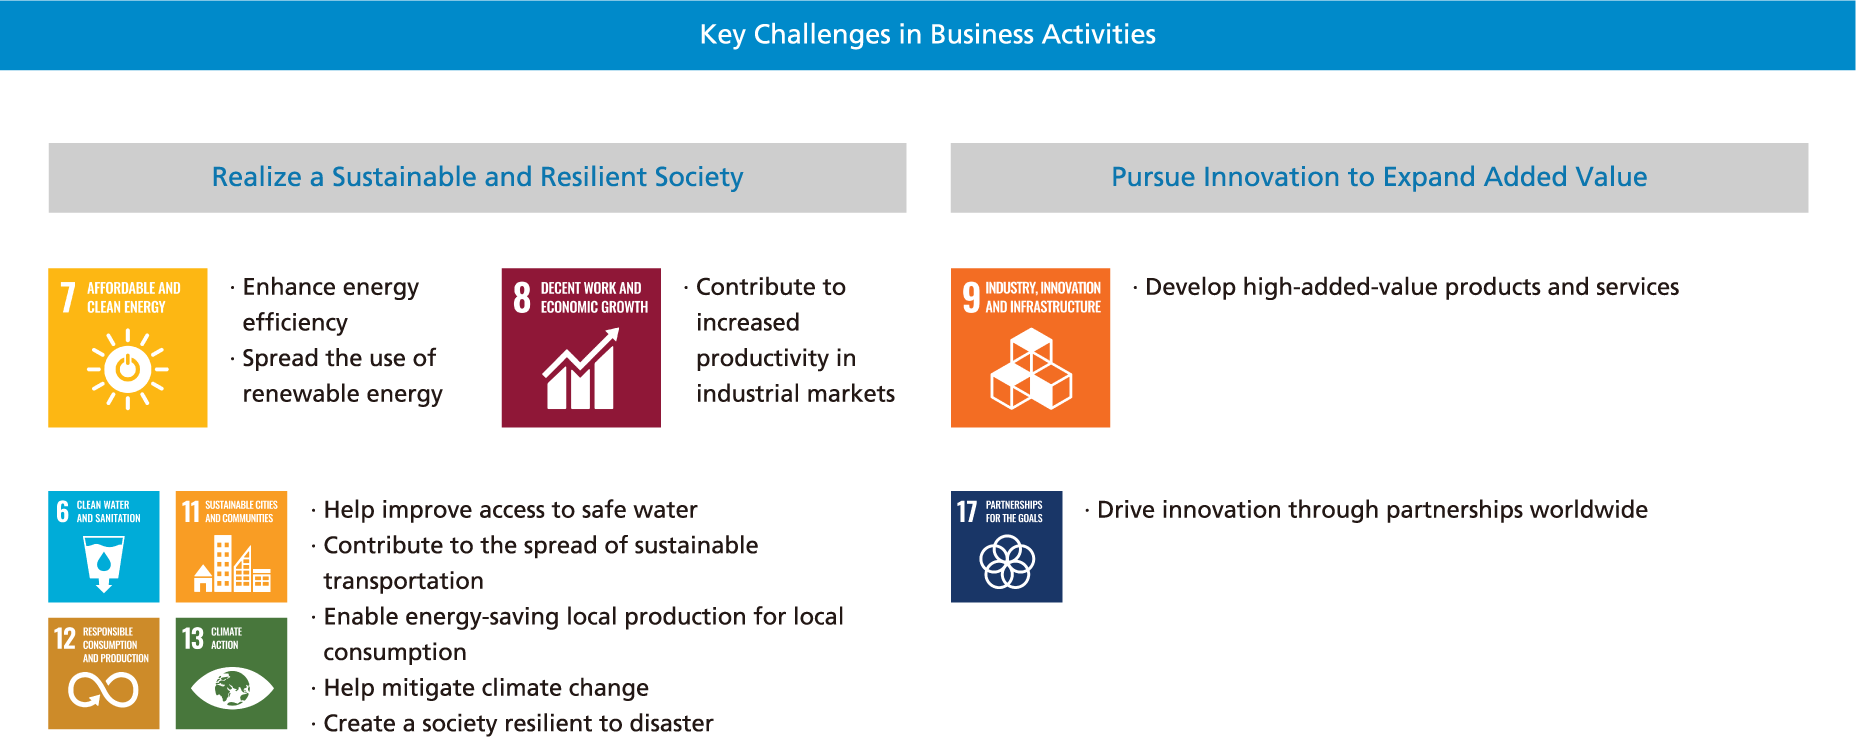 Key Challenges in Business Activities